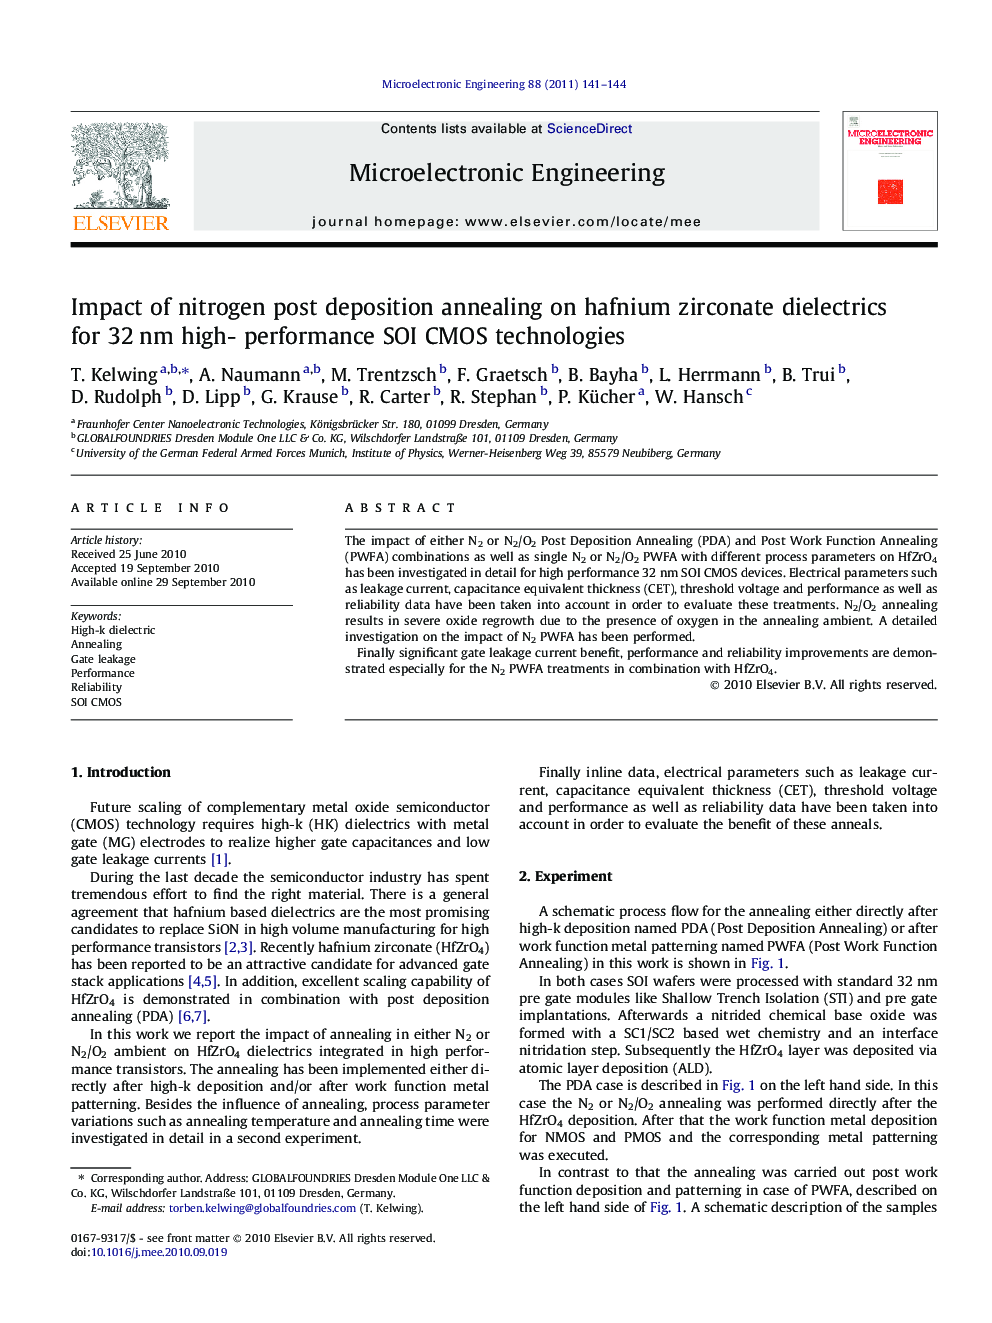 Impact of nitrogen post deposition annealing on hafnium zirconate dielectrics for 32 nm high-performance SOI CMOS technologies